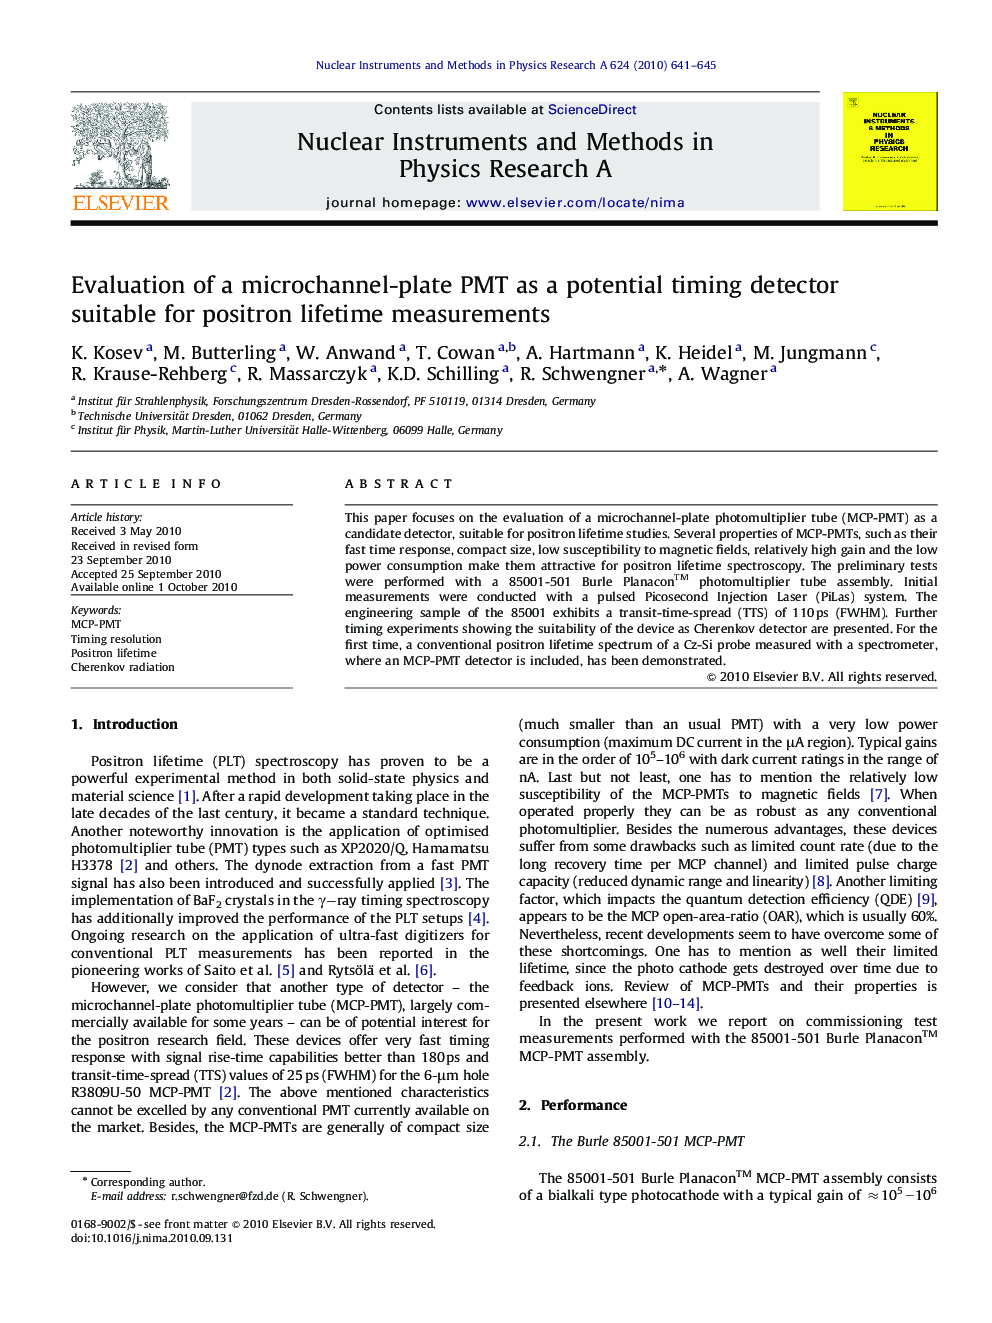 Evaluation of a microchannel-plate PMT as a potential timing detector suitable for positron lifetime measurements